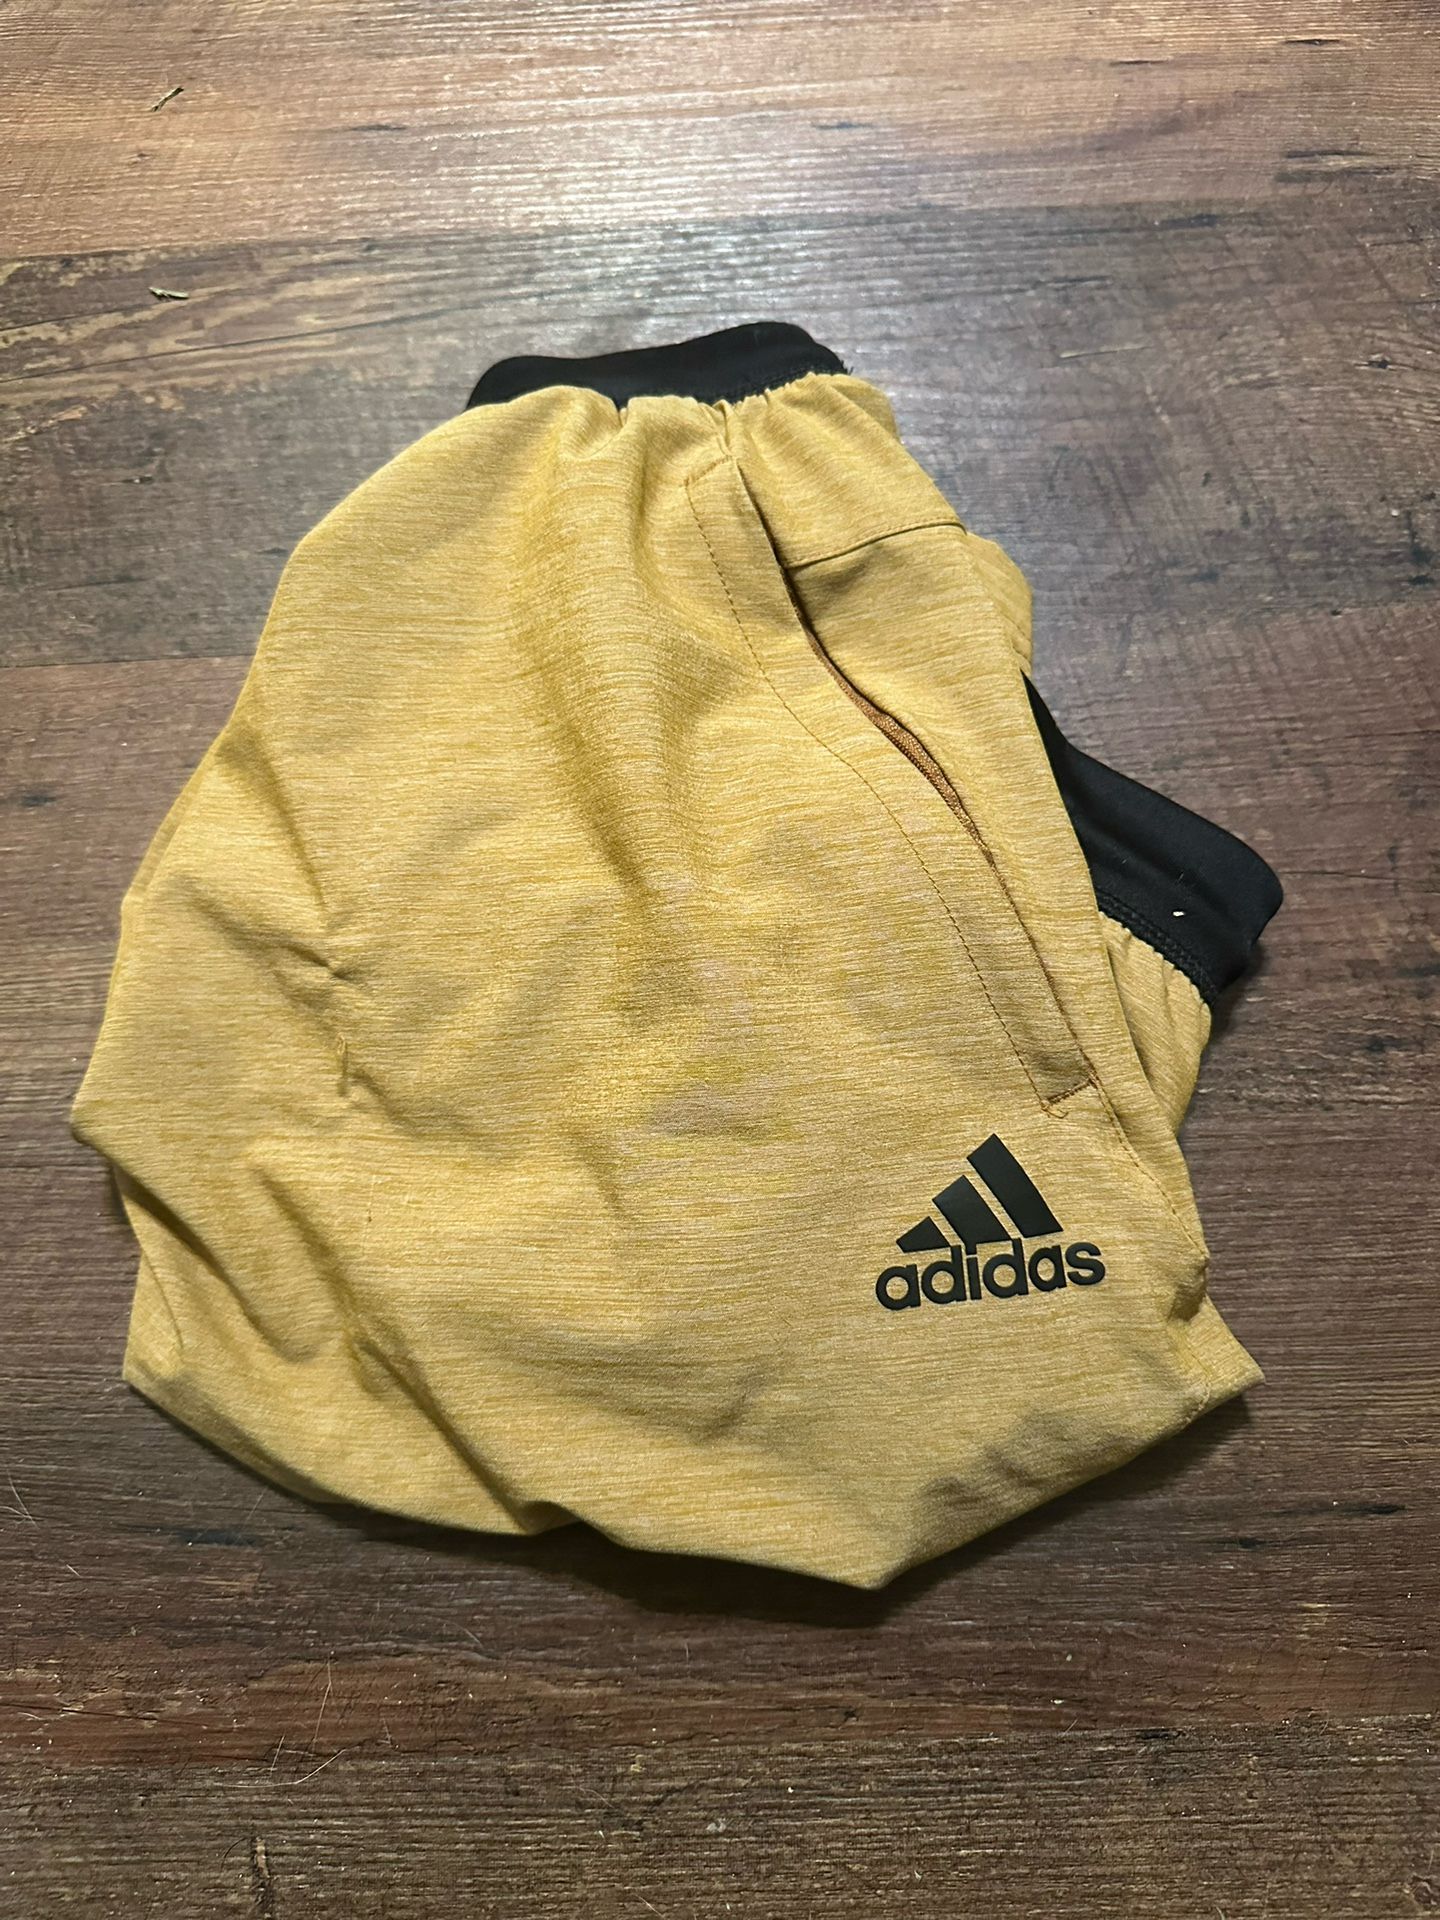 Adidas Woven Athletic Shorts 